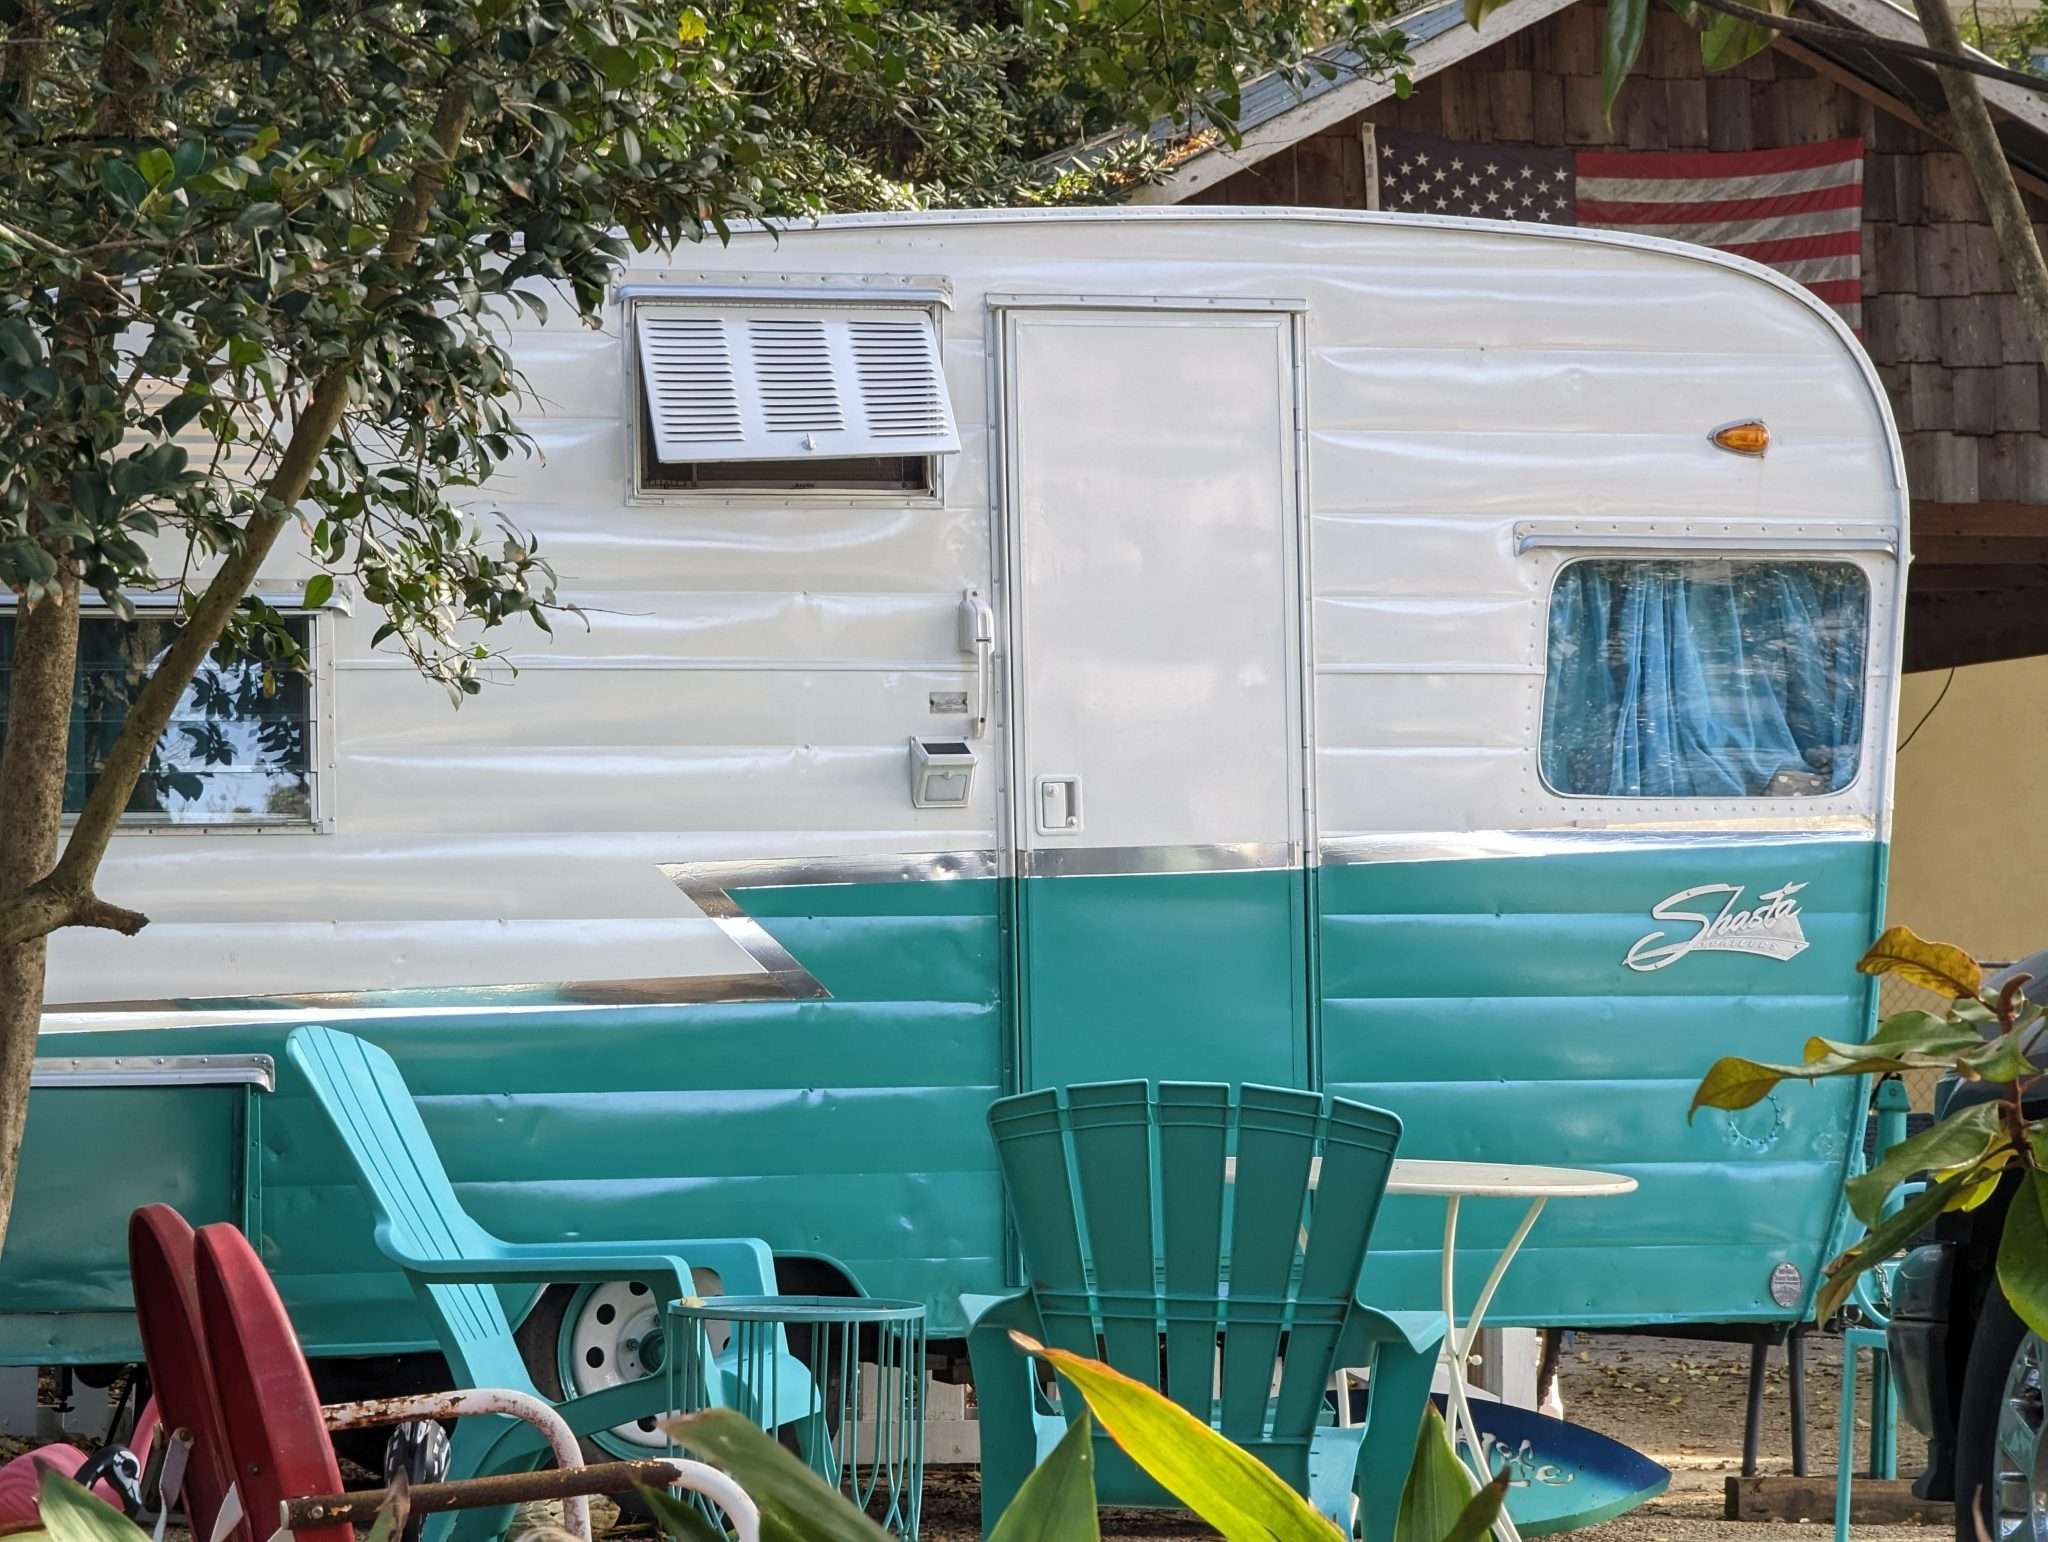 Vintage Shasta camper